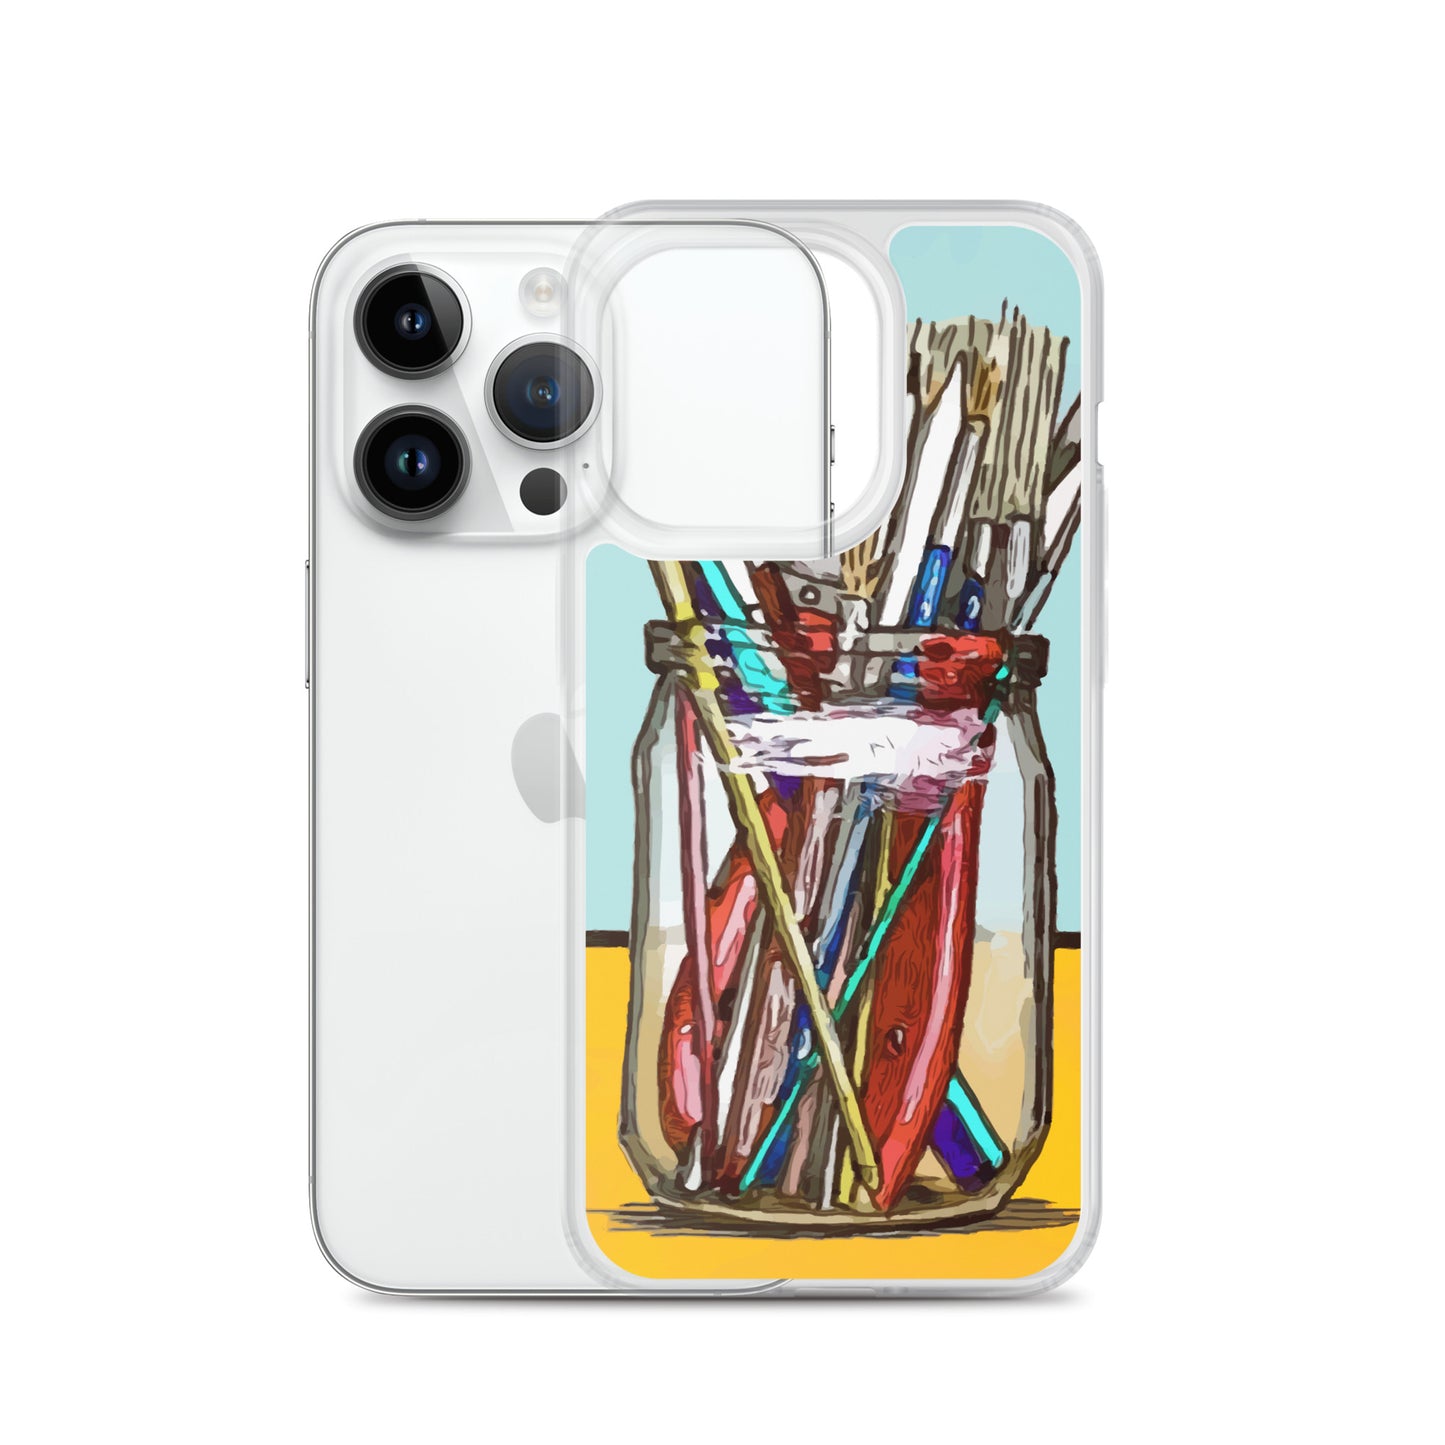 Paintbrush iPhone Case